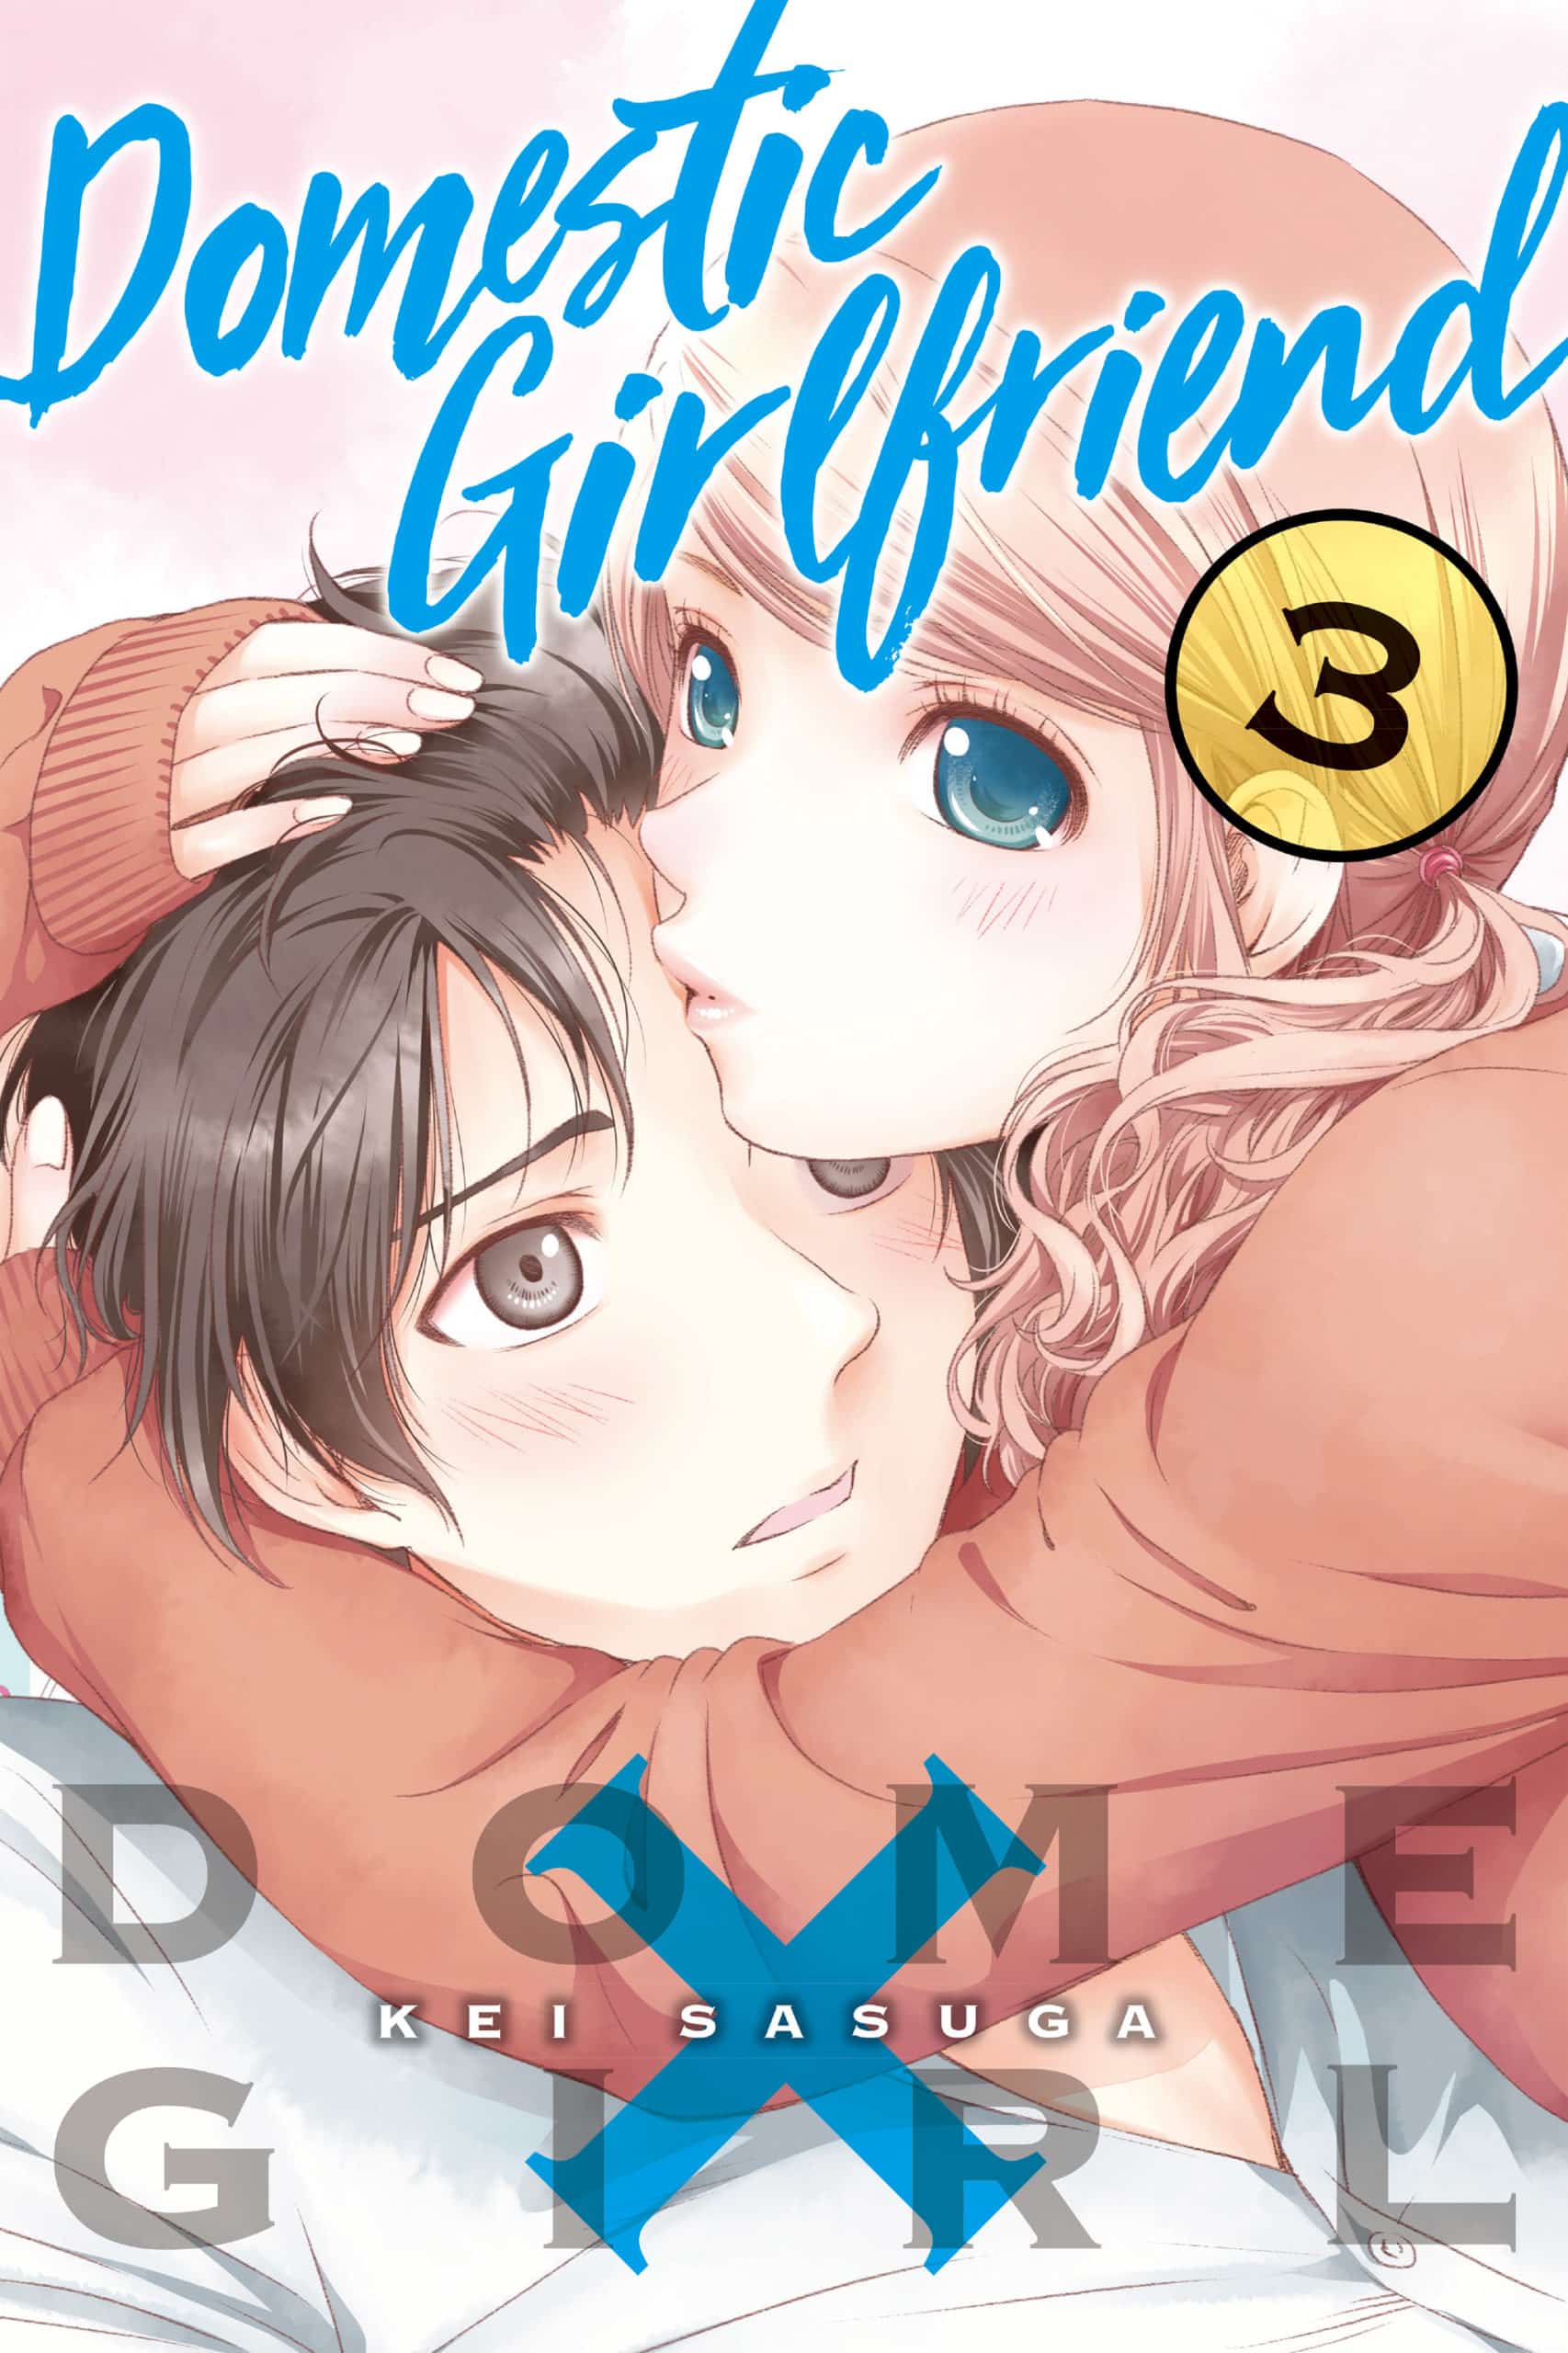 Kei Sasuga: Domestic Girlfriend, Volume 3 (EBook, 2017, Kodansha Comics)